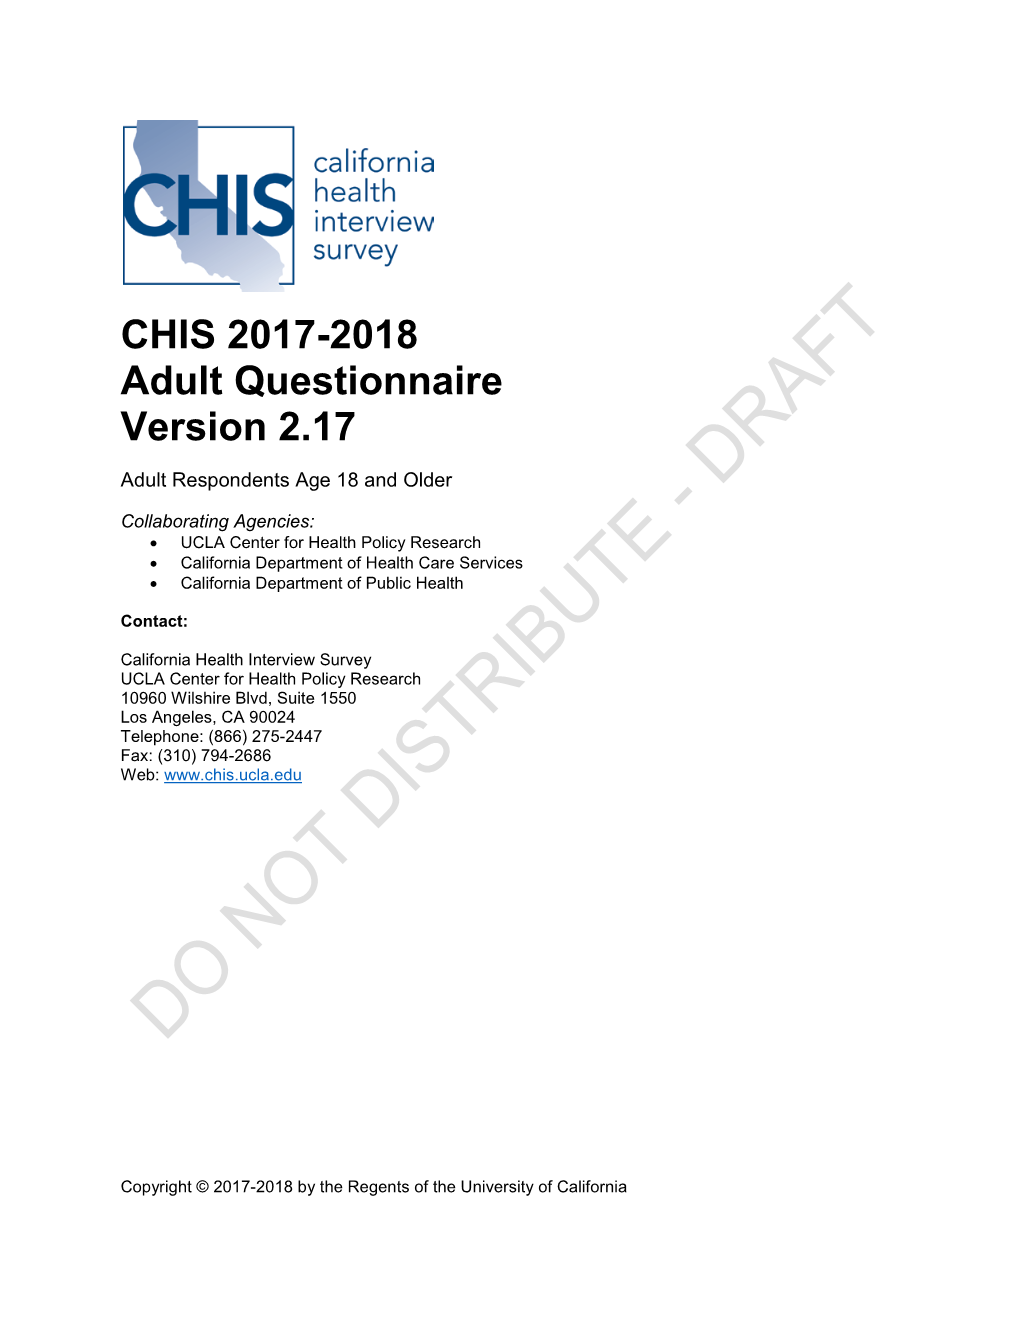 CHIS 2017-2018 Adult Questionnaire Version 2.17